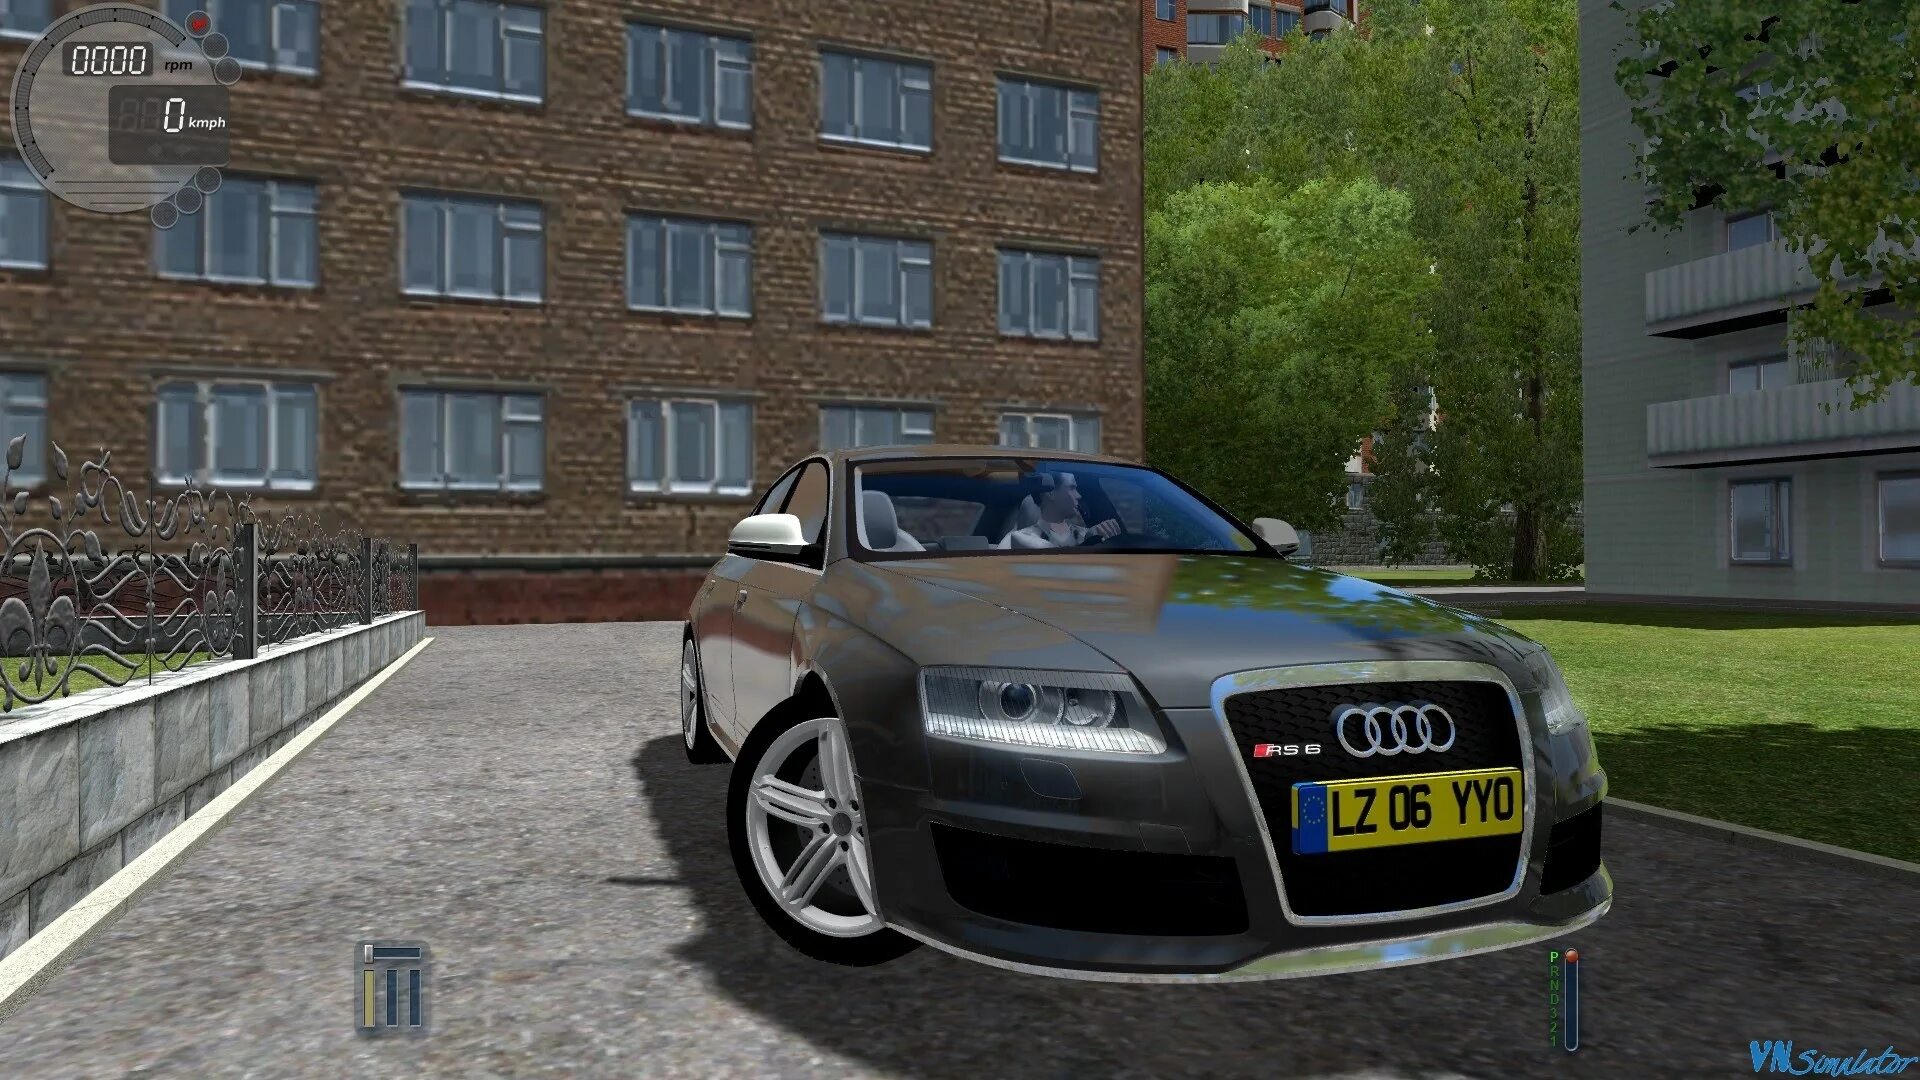 Audi a6 City car Driving. Audi rs6 c5 City car Driving. Audi q7 City car Driving. Ауди а6 с5 Сити кар драйвинг.